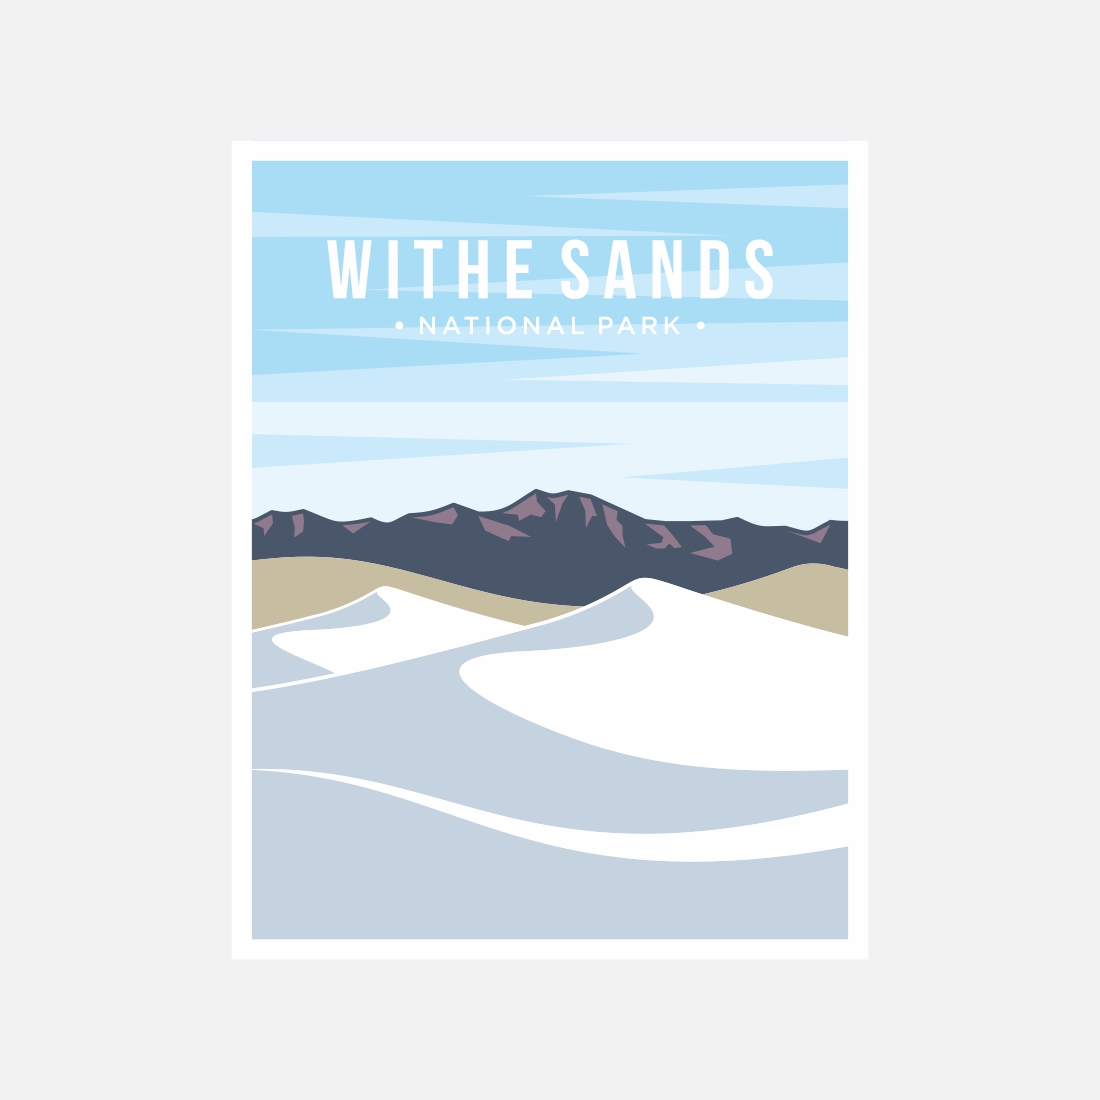 White Sand National Park poster vector illustration design – Only $8 preview image.